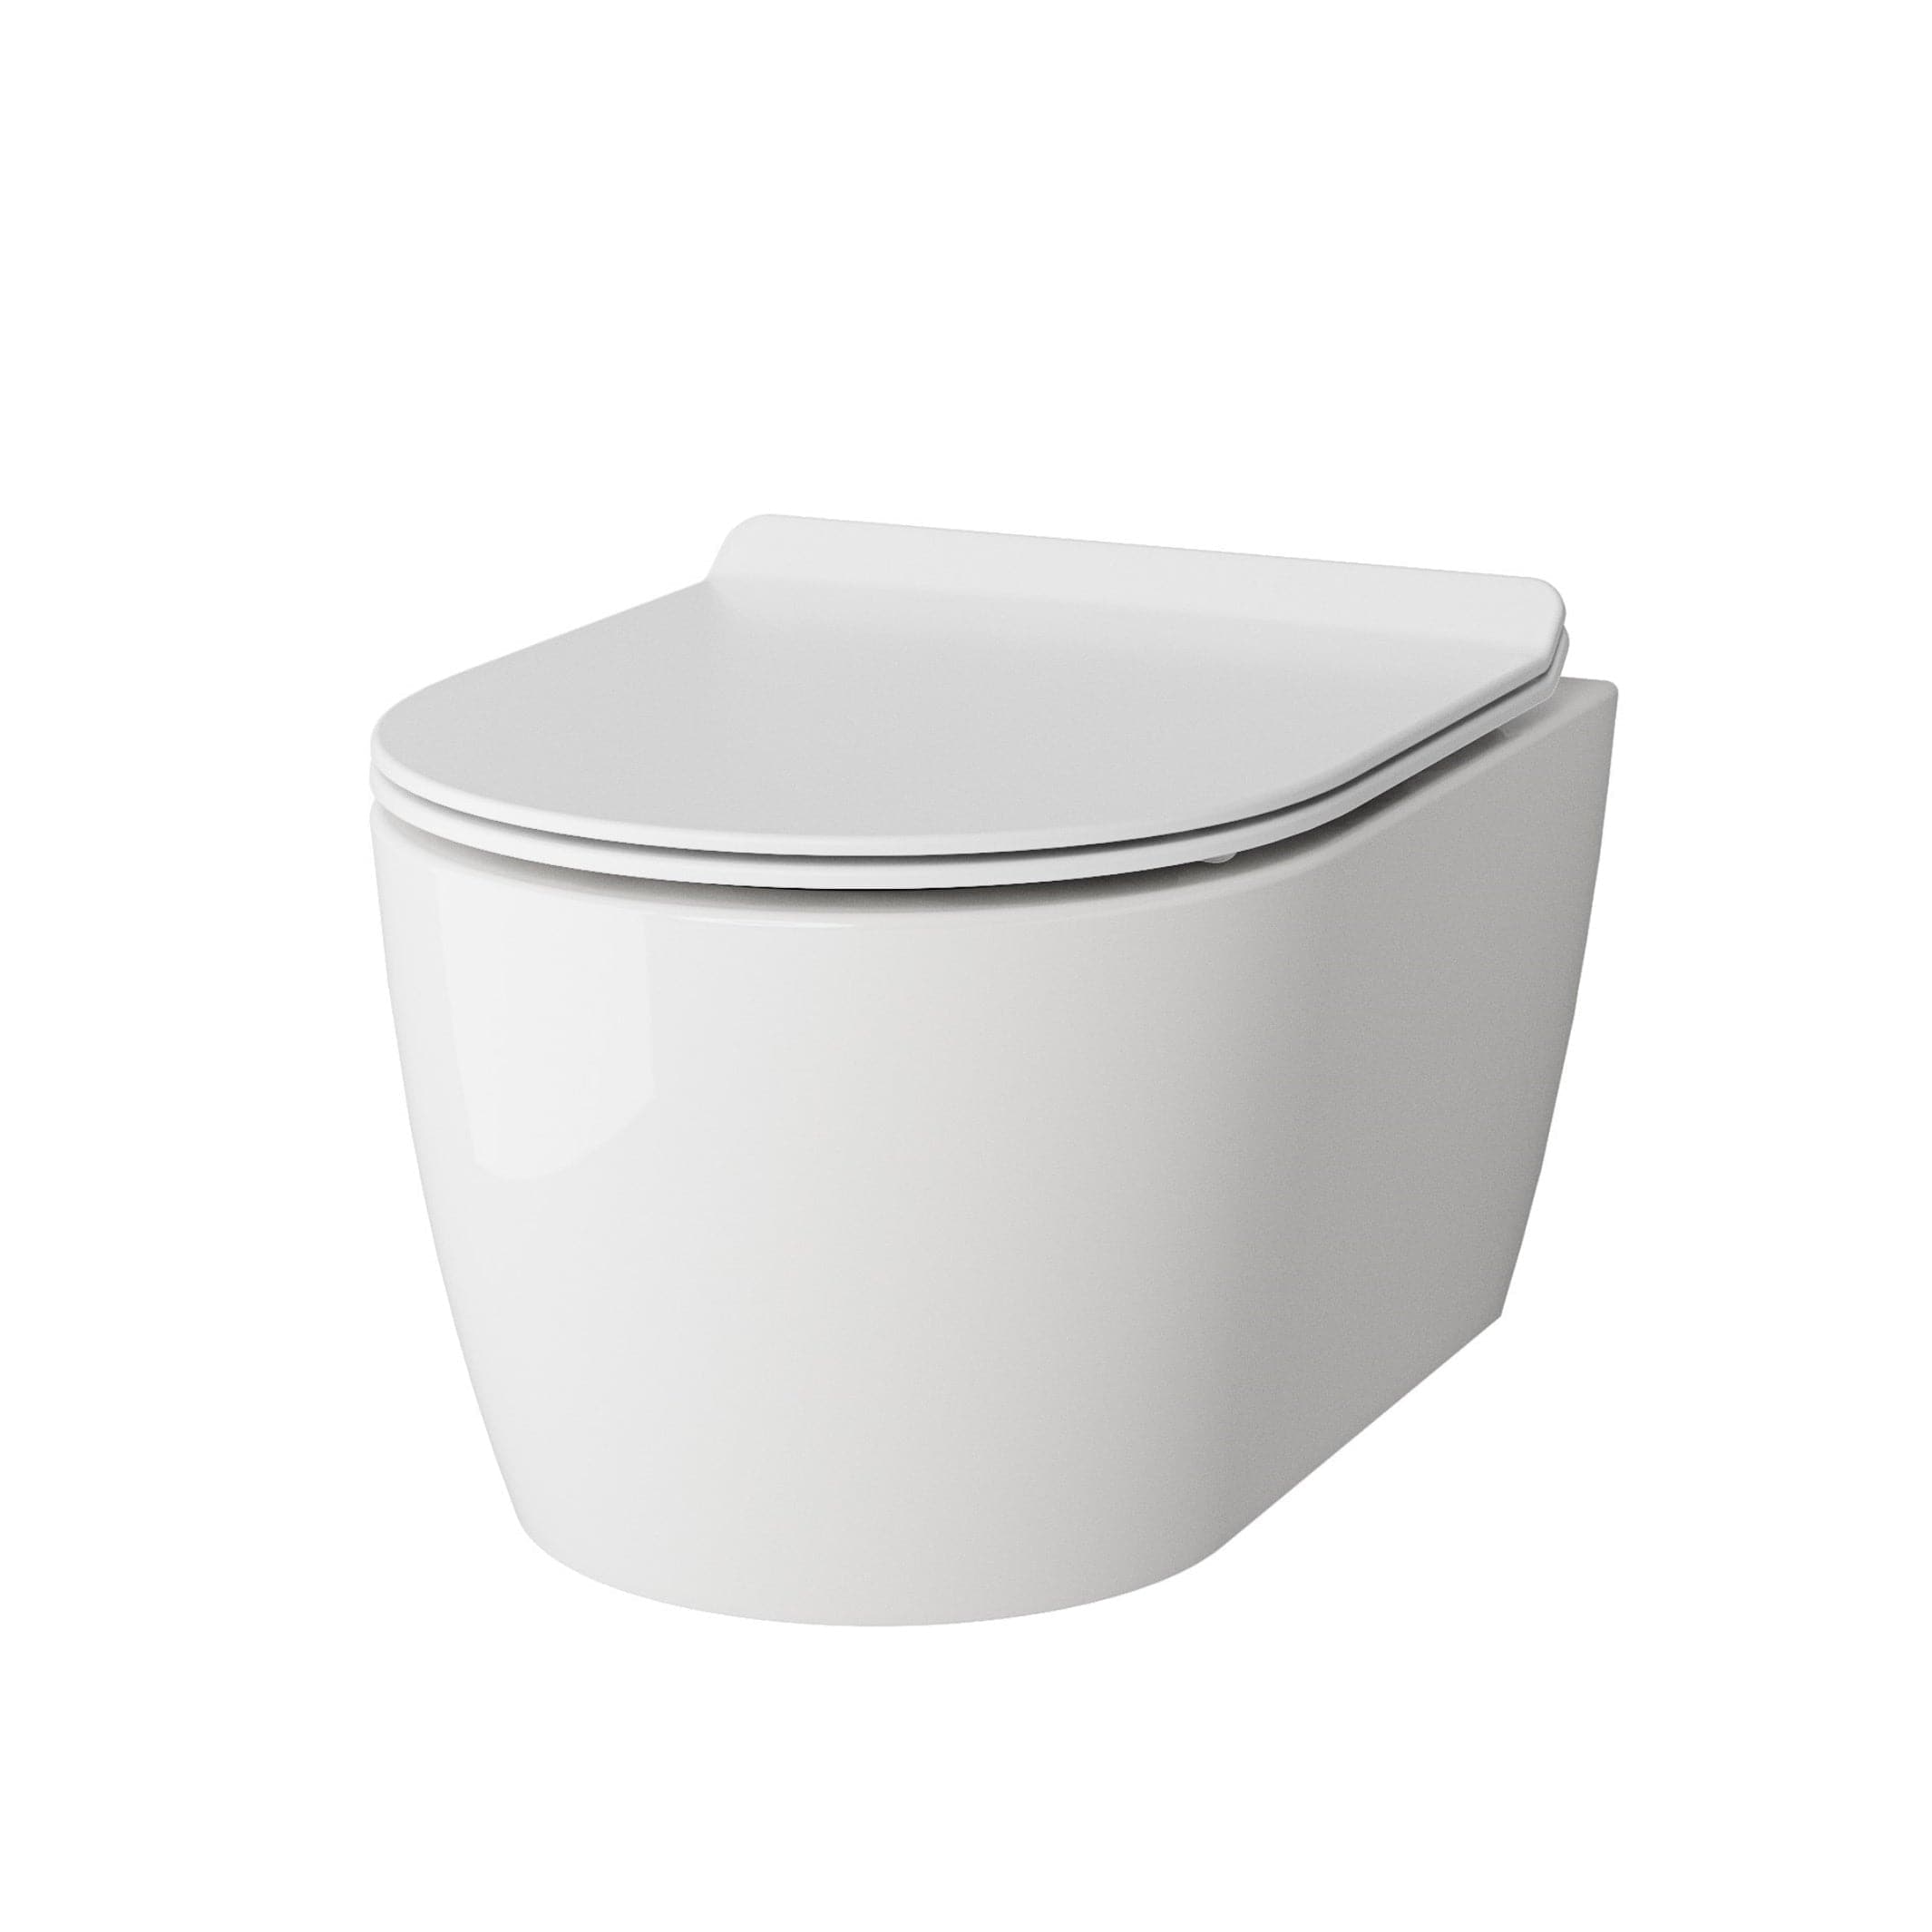 Vikingbad Aida Kompakt Veggskål med Soft-close Sete - Vegghengt Toalett Hvit / Slim Vegghengt toalett